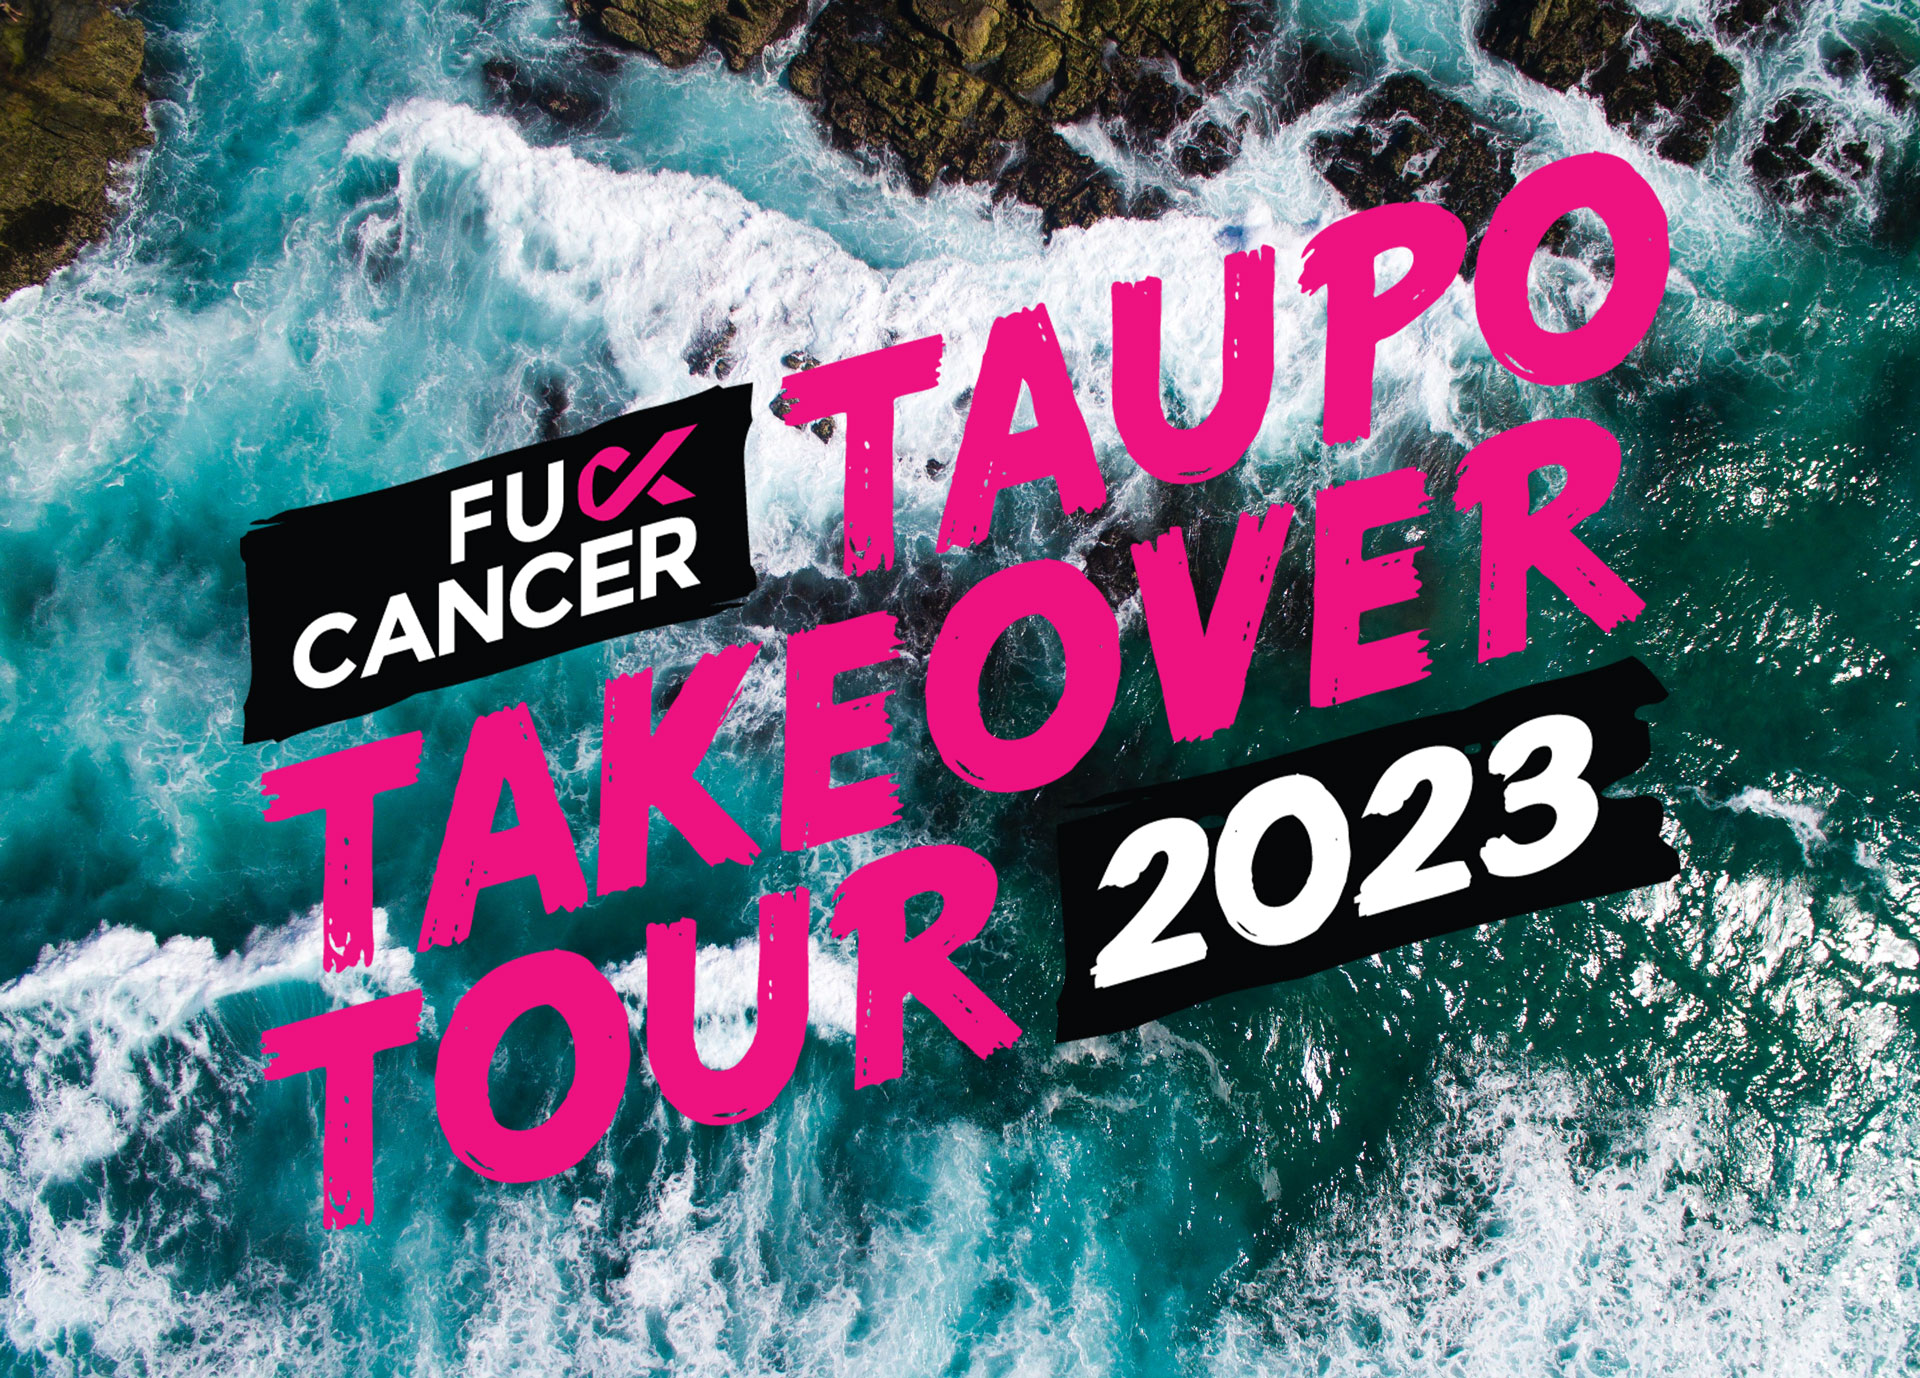 Taupo Takeover 18-19 Feb 2023